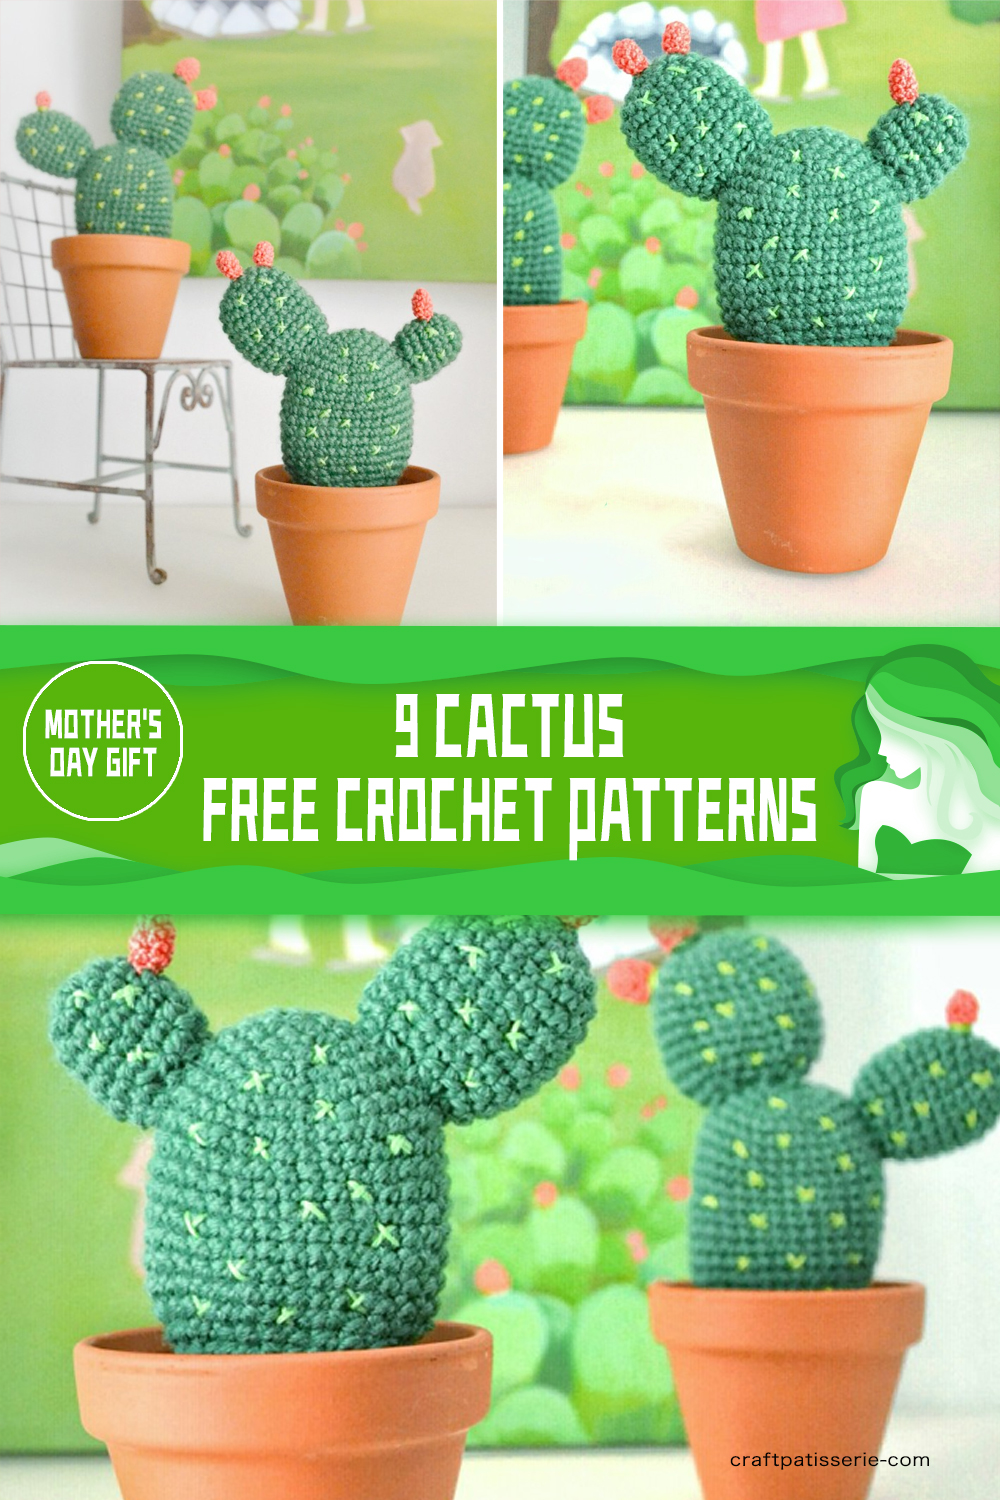  Cactus amigurumi FREE Crochet Patterns